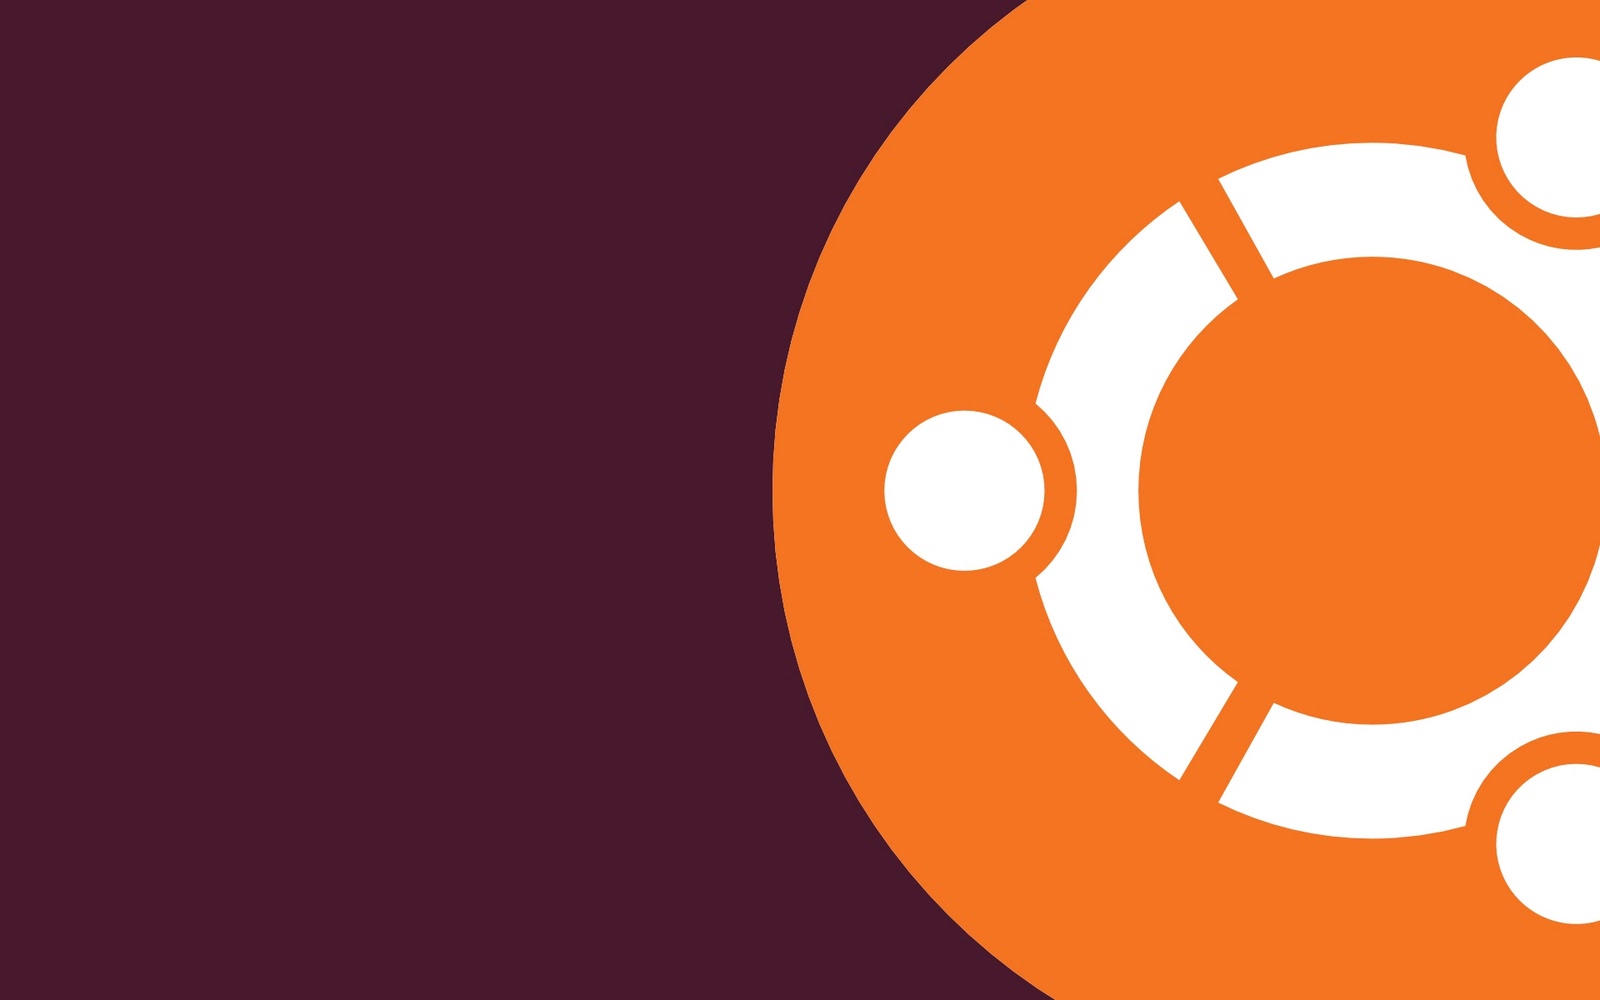 News Ubuntu Changer limage de fond dcran du login sous Ubuntu